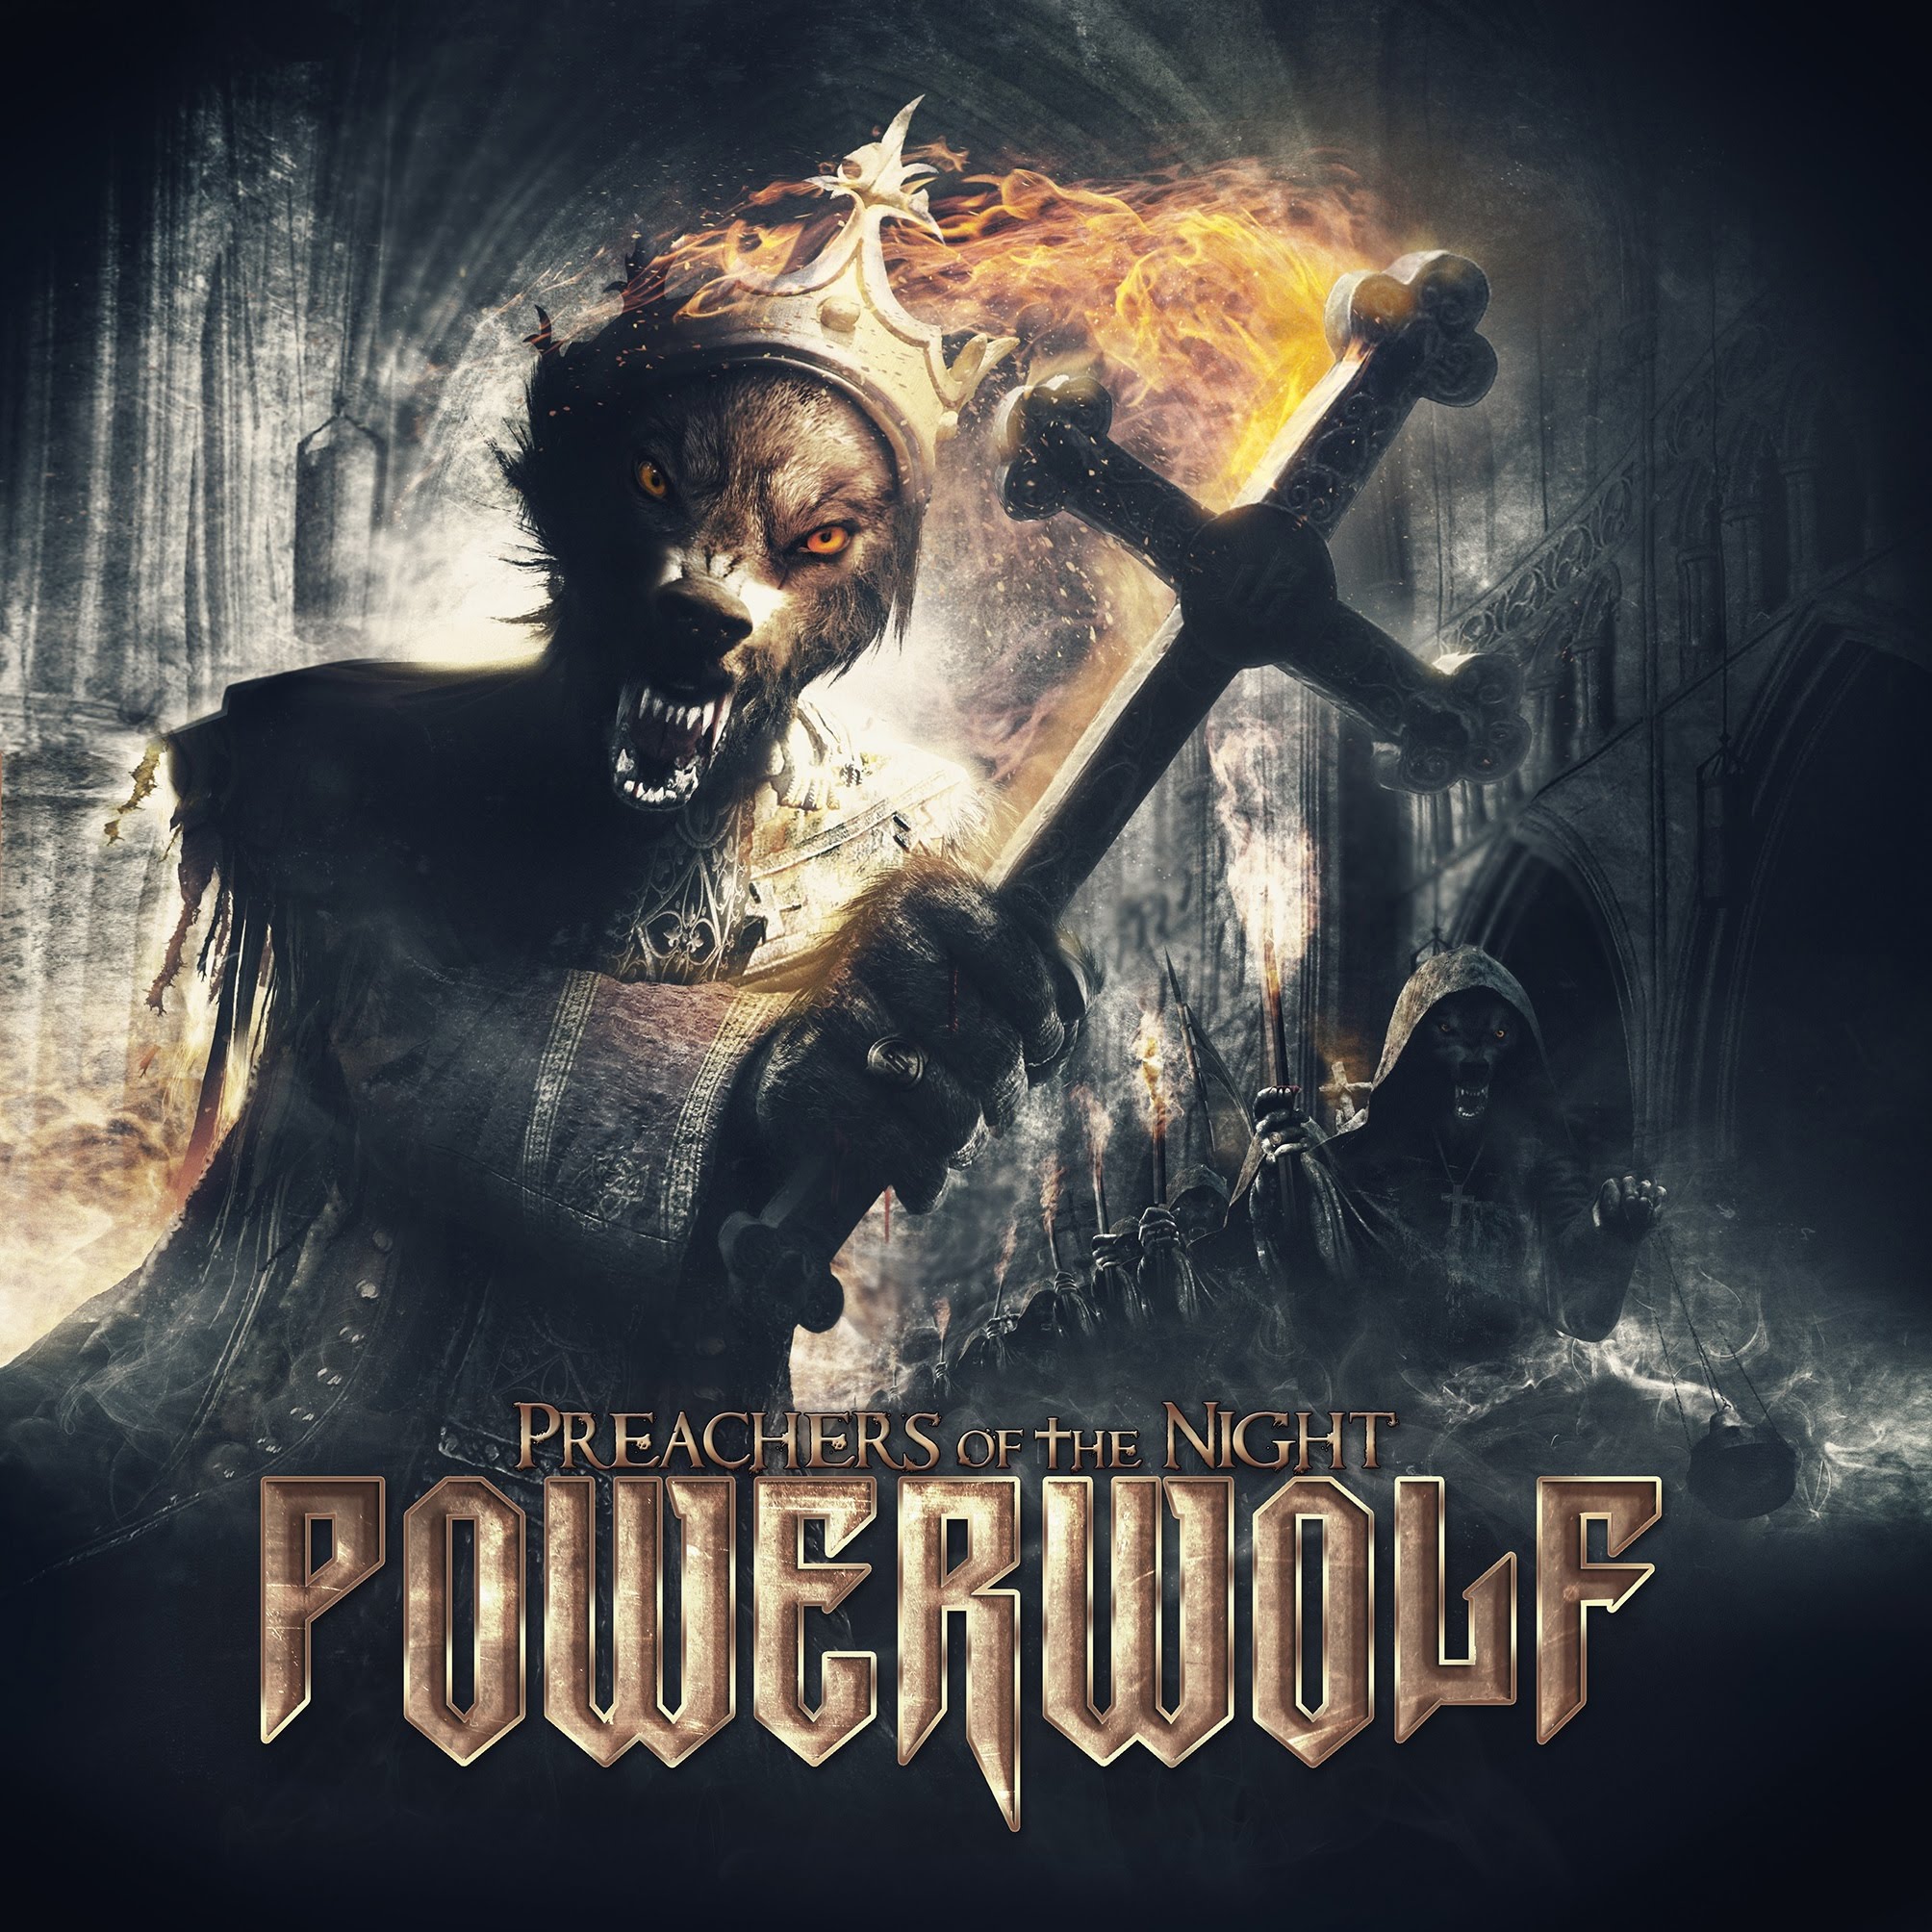 Powerwolf HD wallpapers, Desktop wallpaper - most viewed